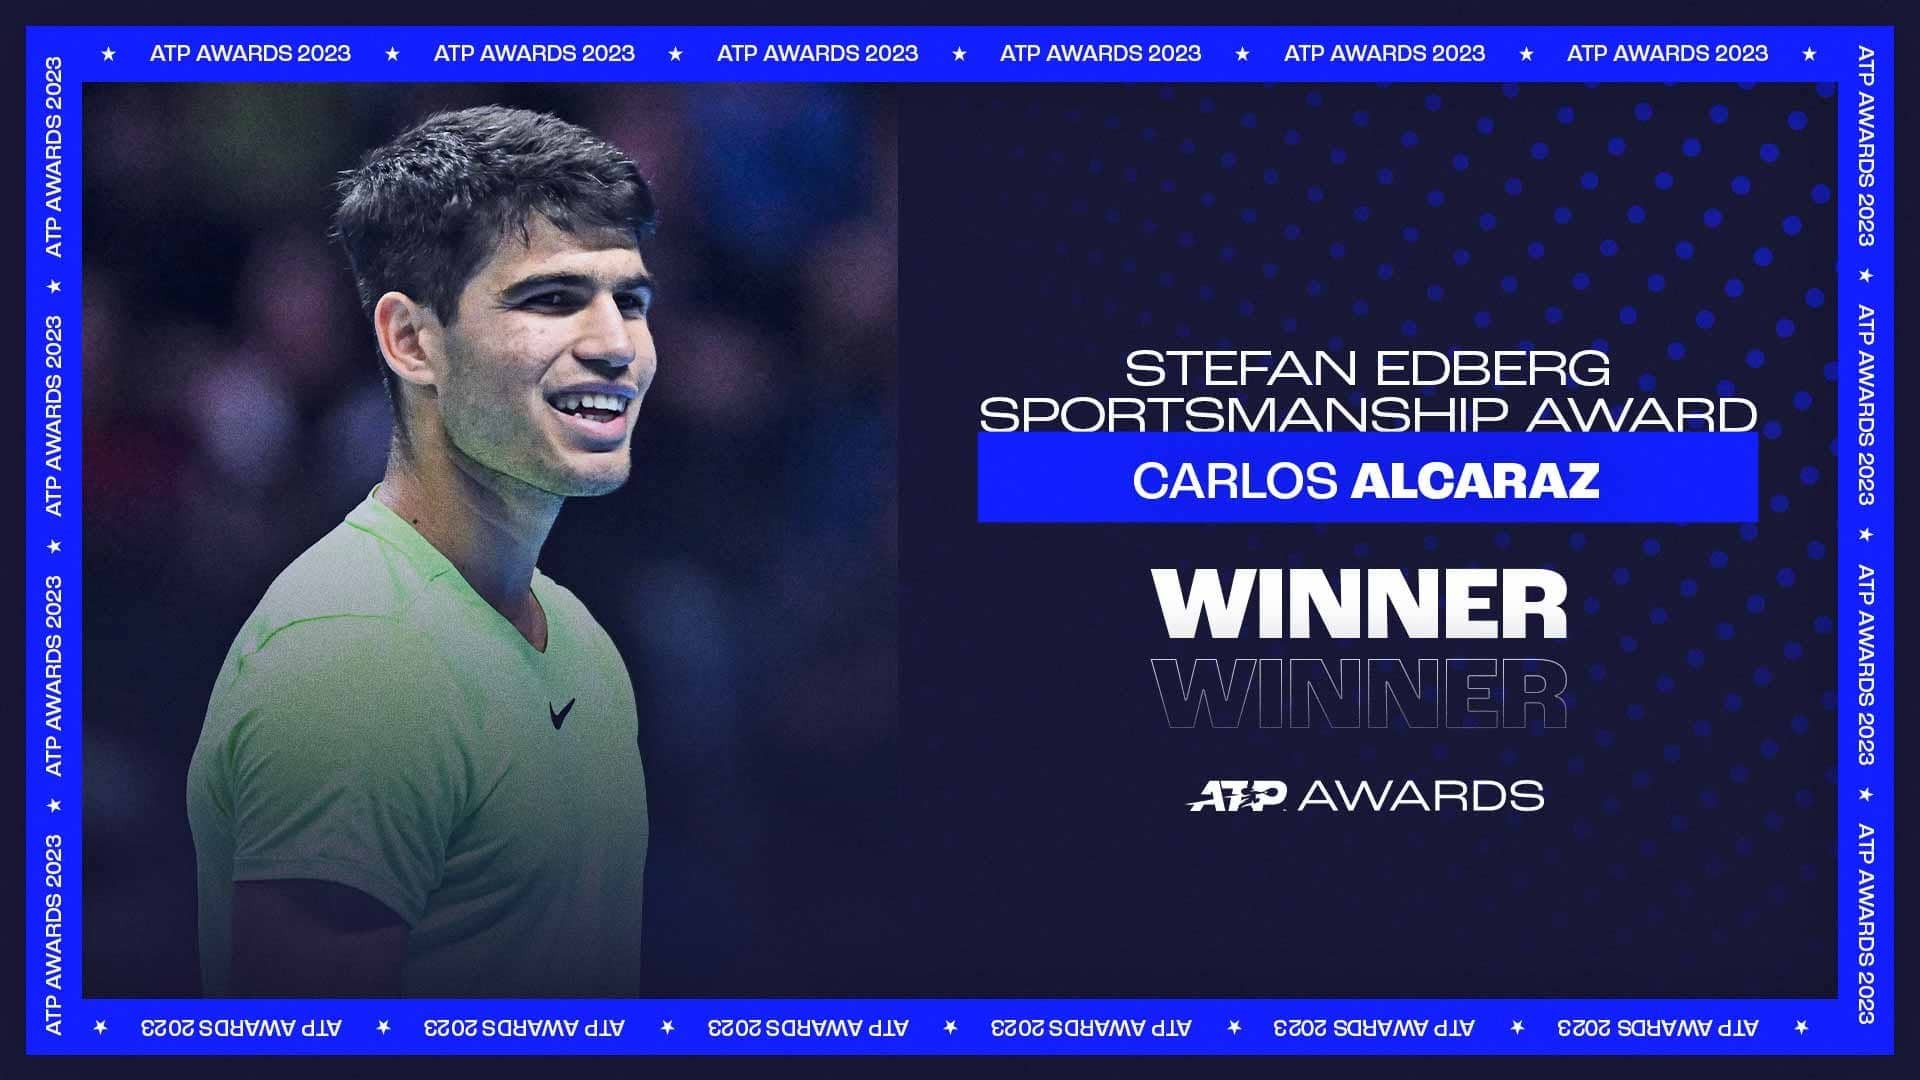 alcaraz-atp-awards-2023-stefan-edberg-sportsmanship-awards-16x9-1702699903.jpg